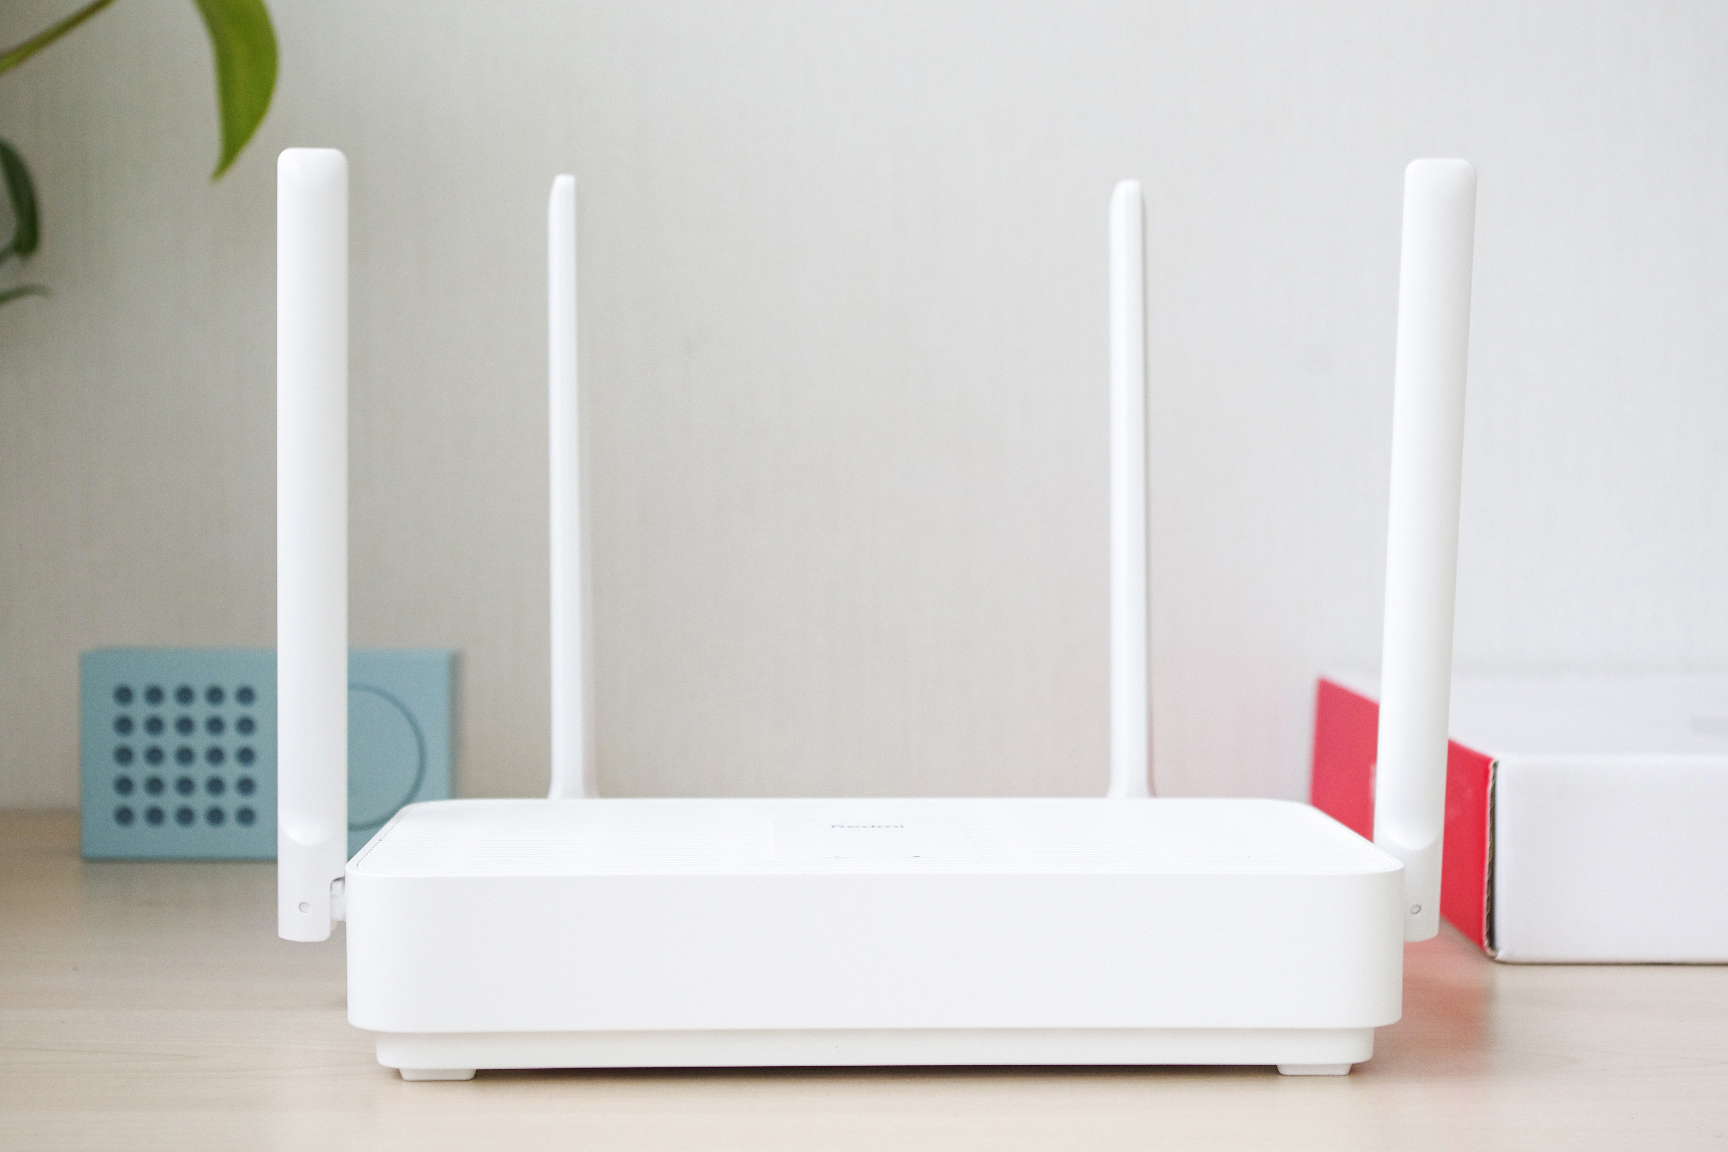 Redmi首款Wi-Fi 6路由器评测：229元同价高配